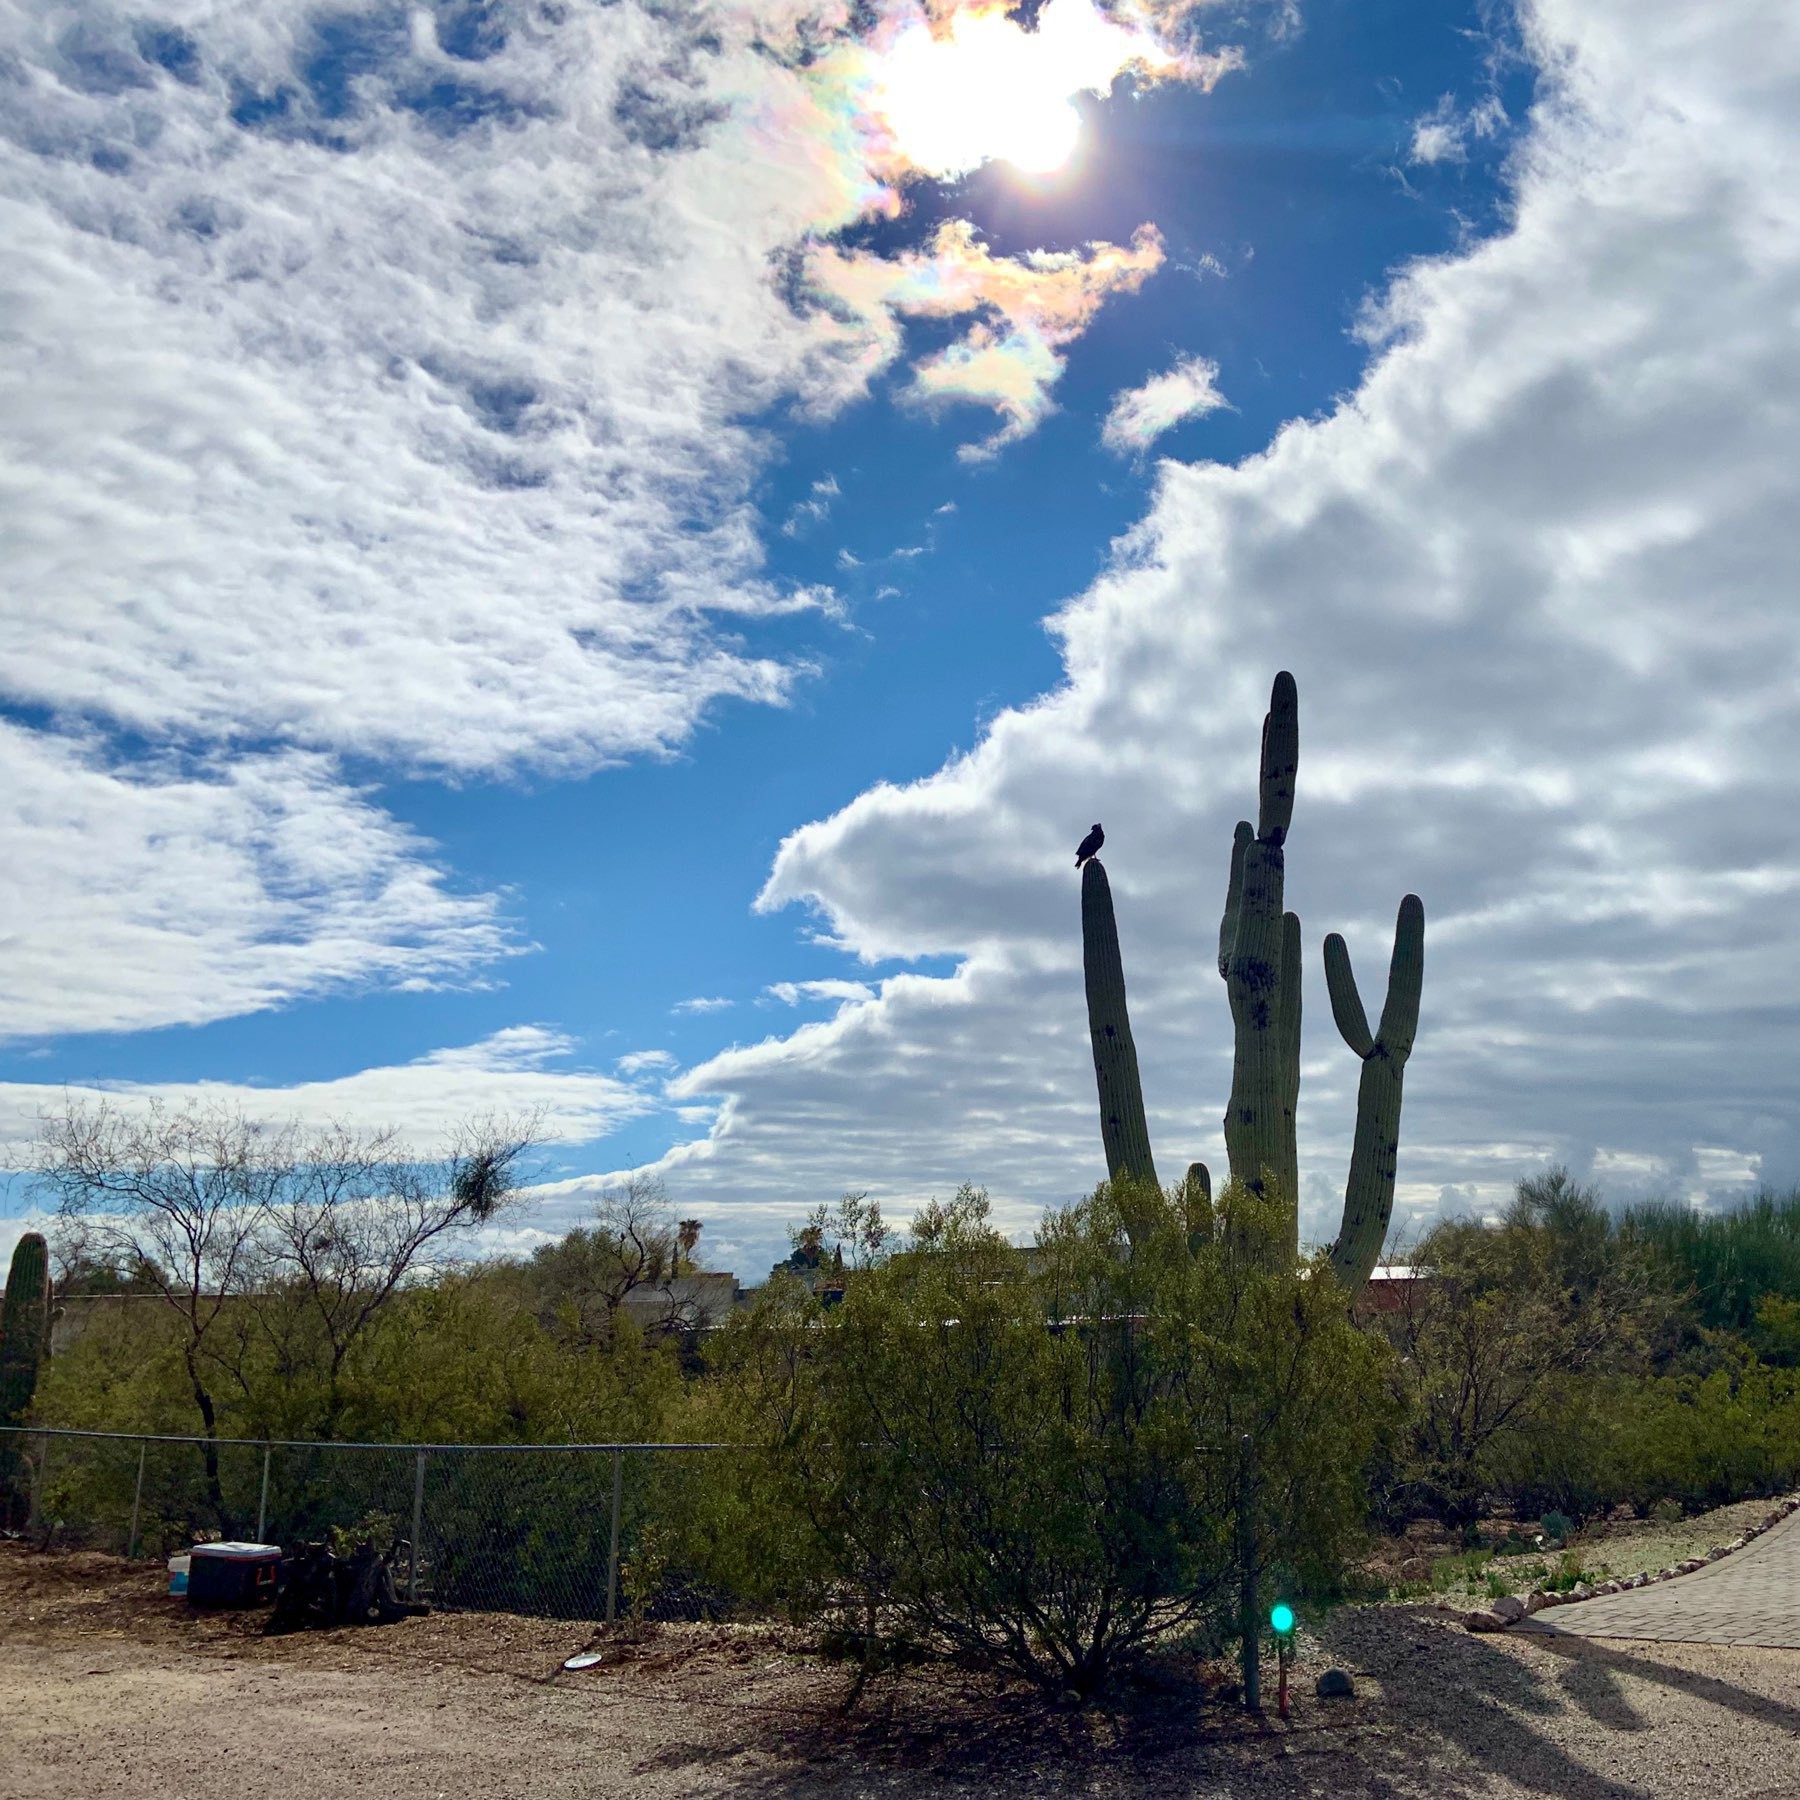 desert scene with bird, cactus, cliud, and sun